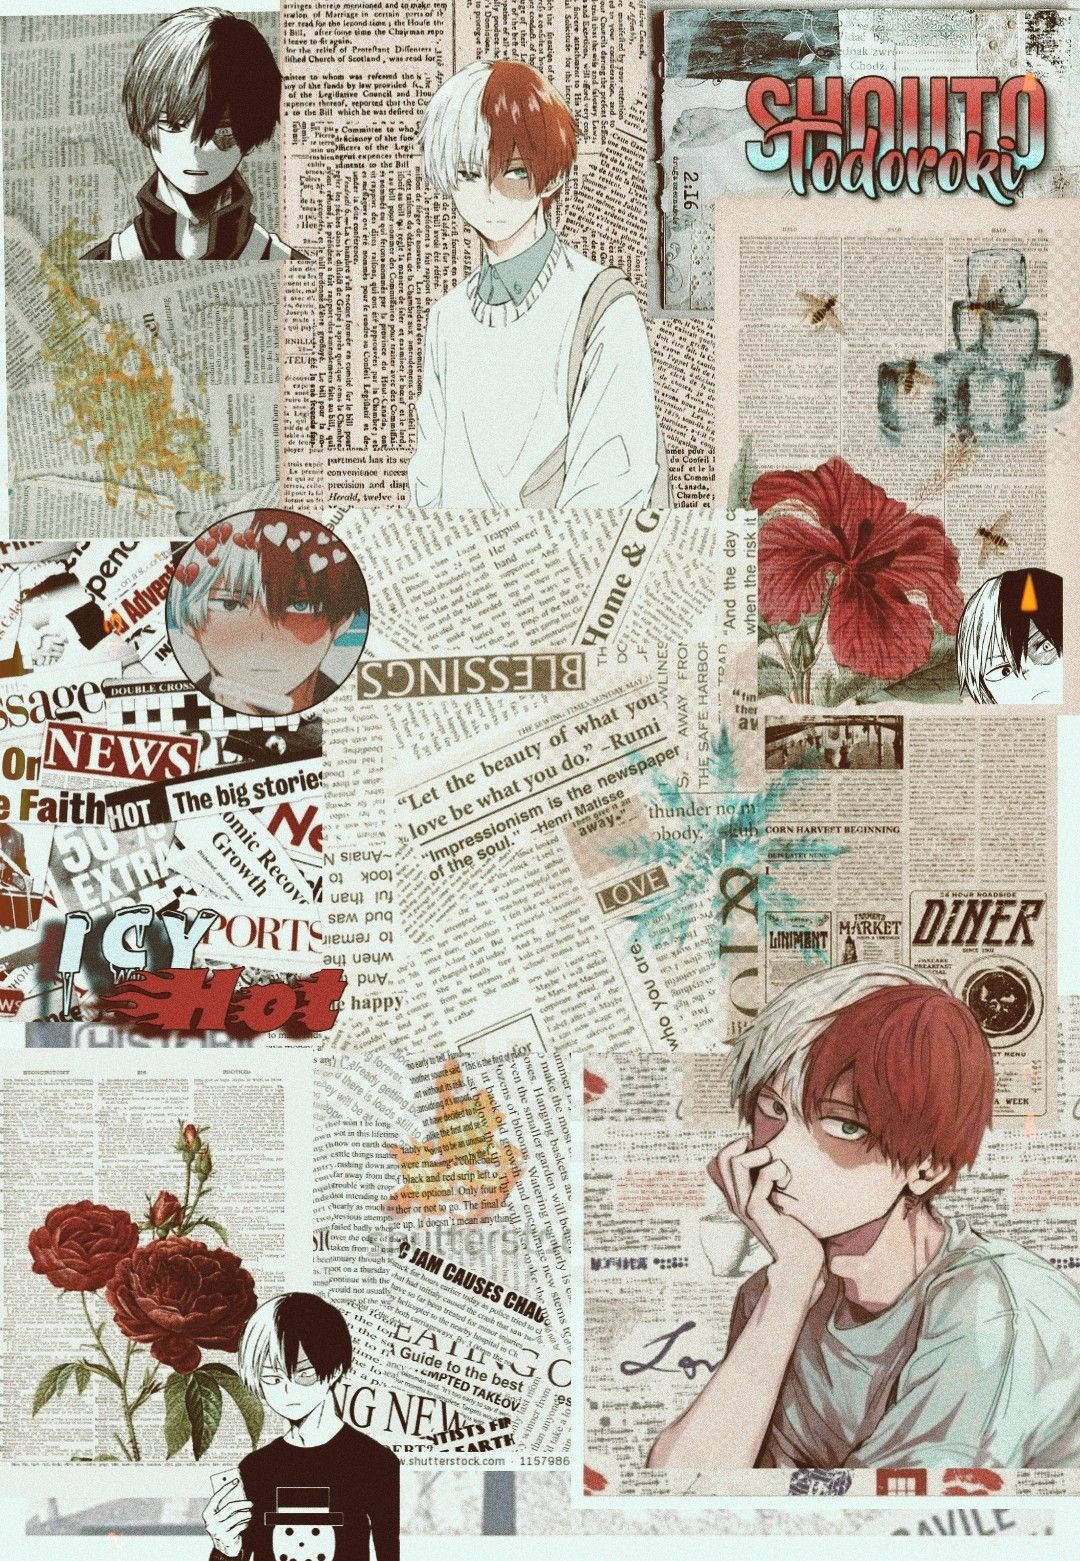 Todoroki Aesthetic Collage Wallpaper